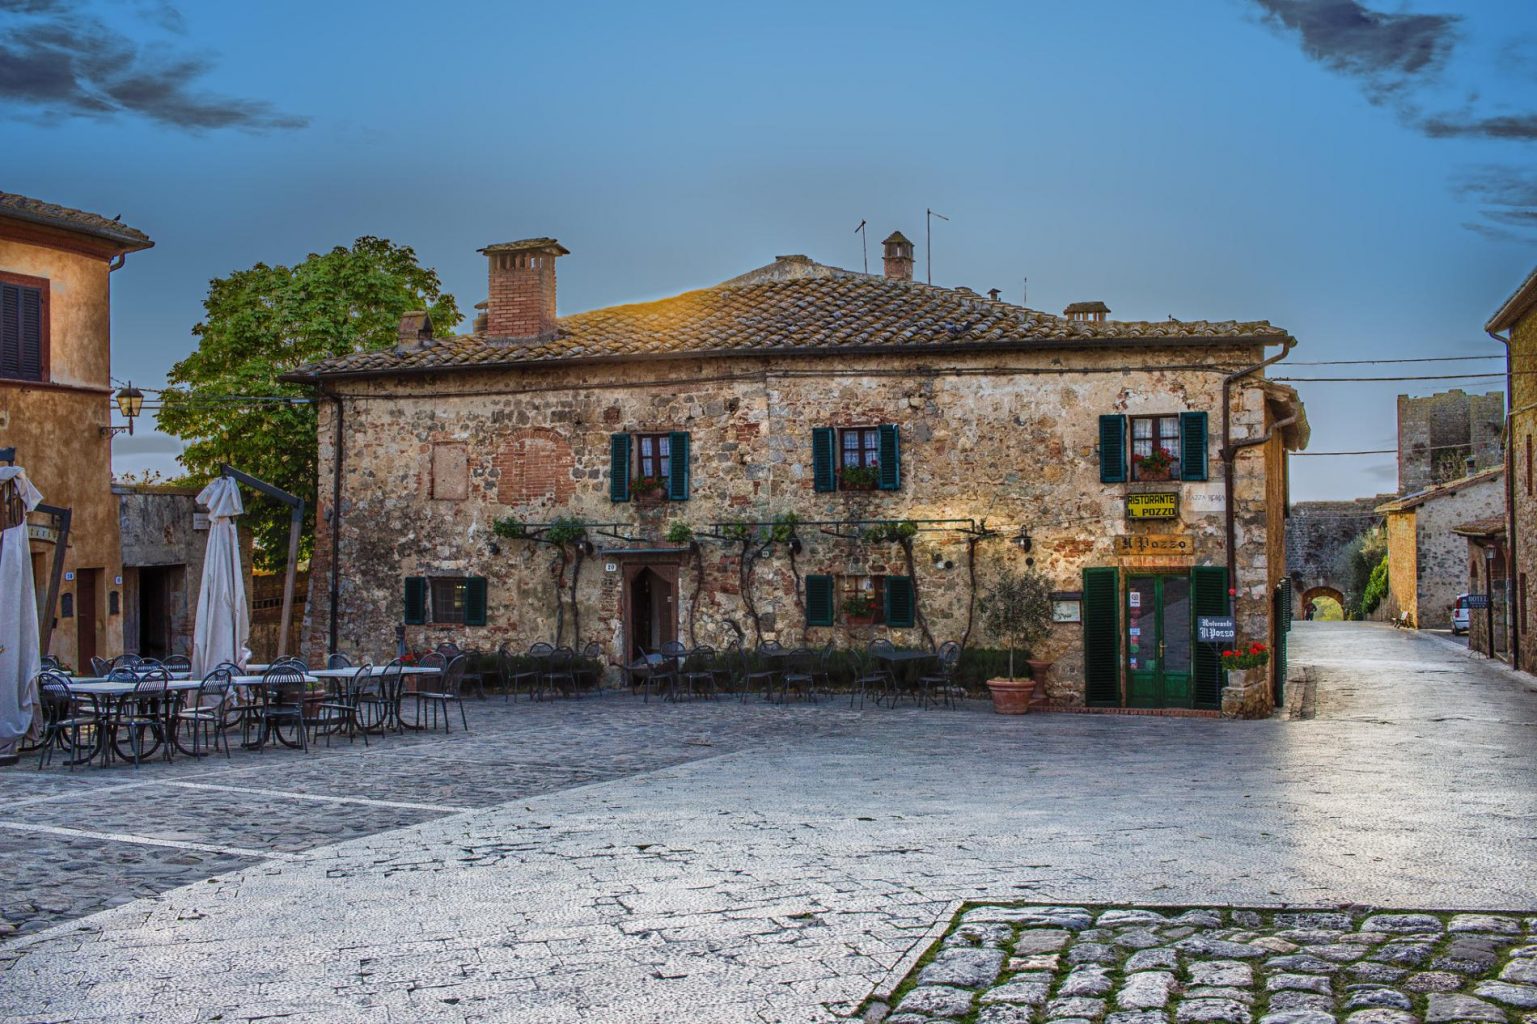 alt= "Monteriggioni's house Tuscany"